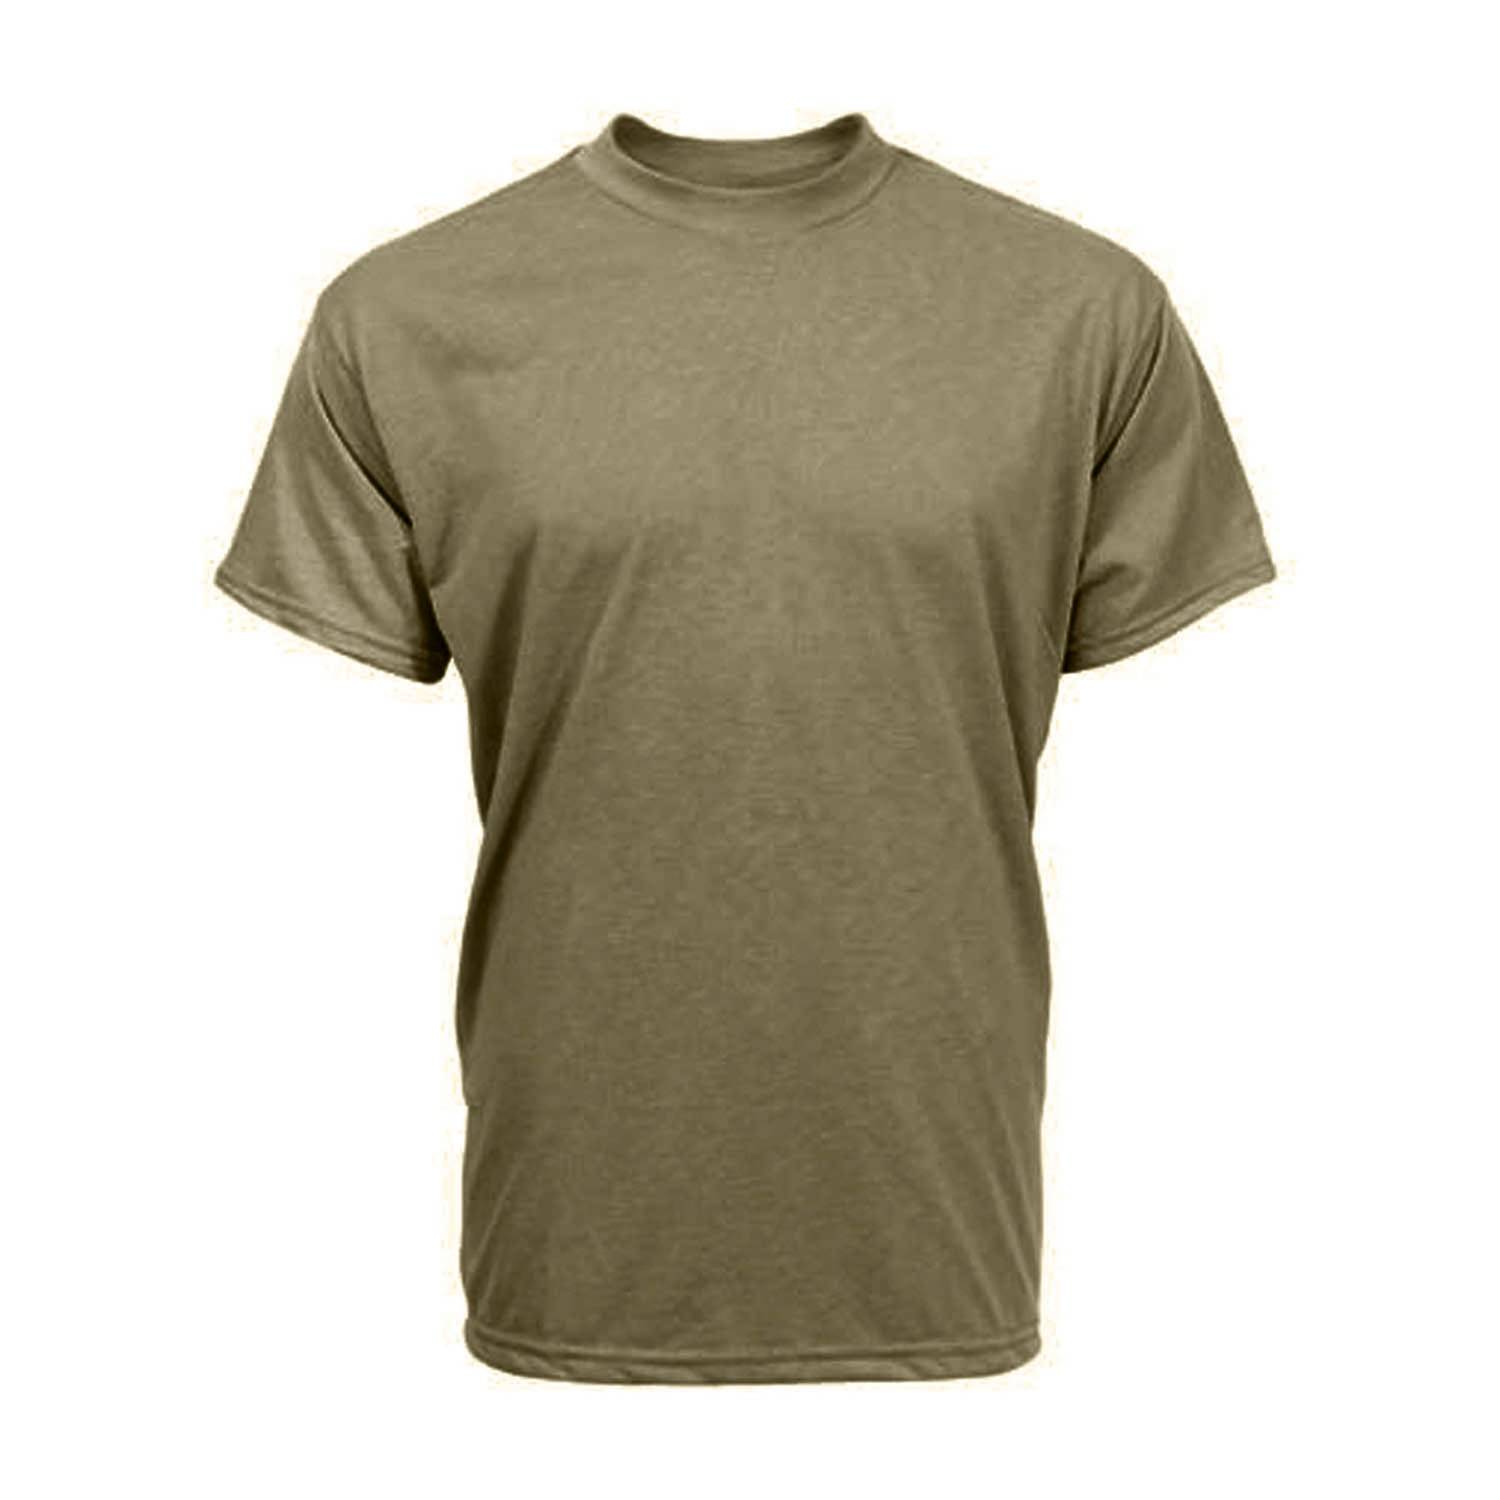 Soffe Tuff Neck T-Shirts (3 Pk) | On & Off Duty Apparel